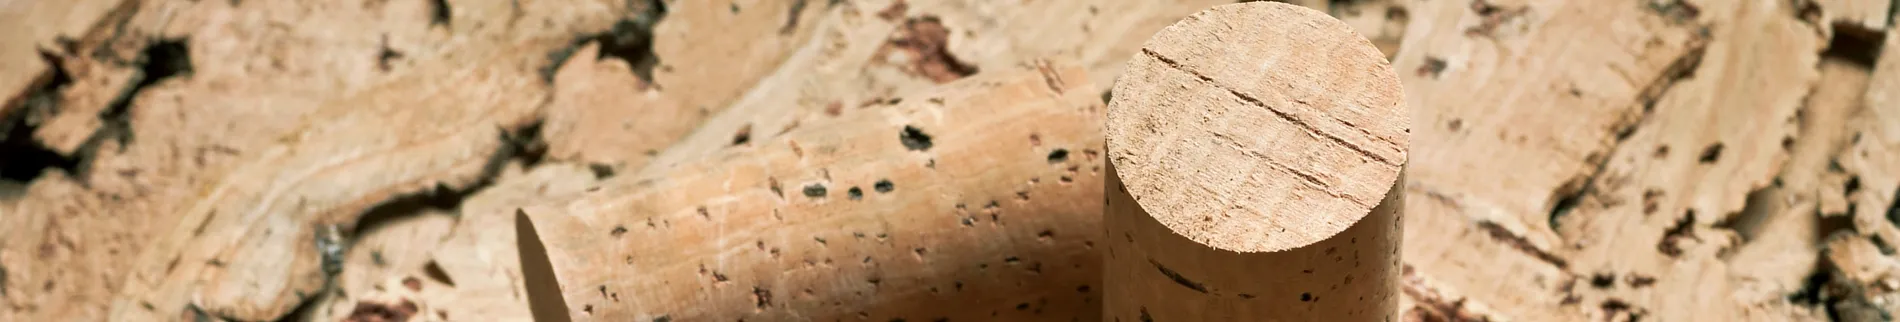 cork close up